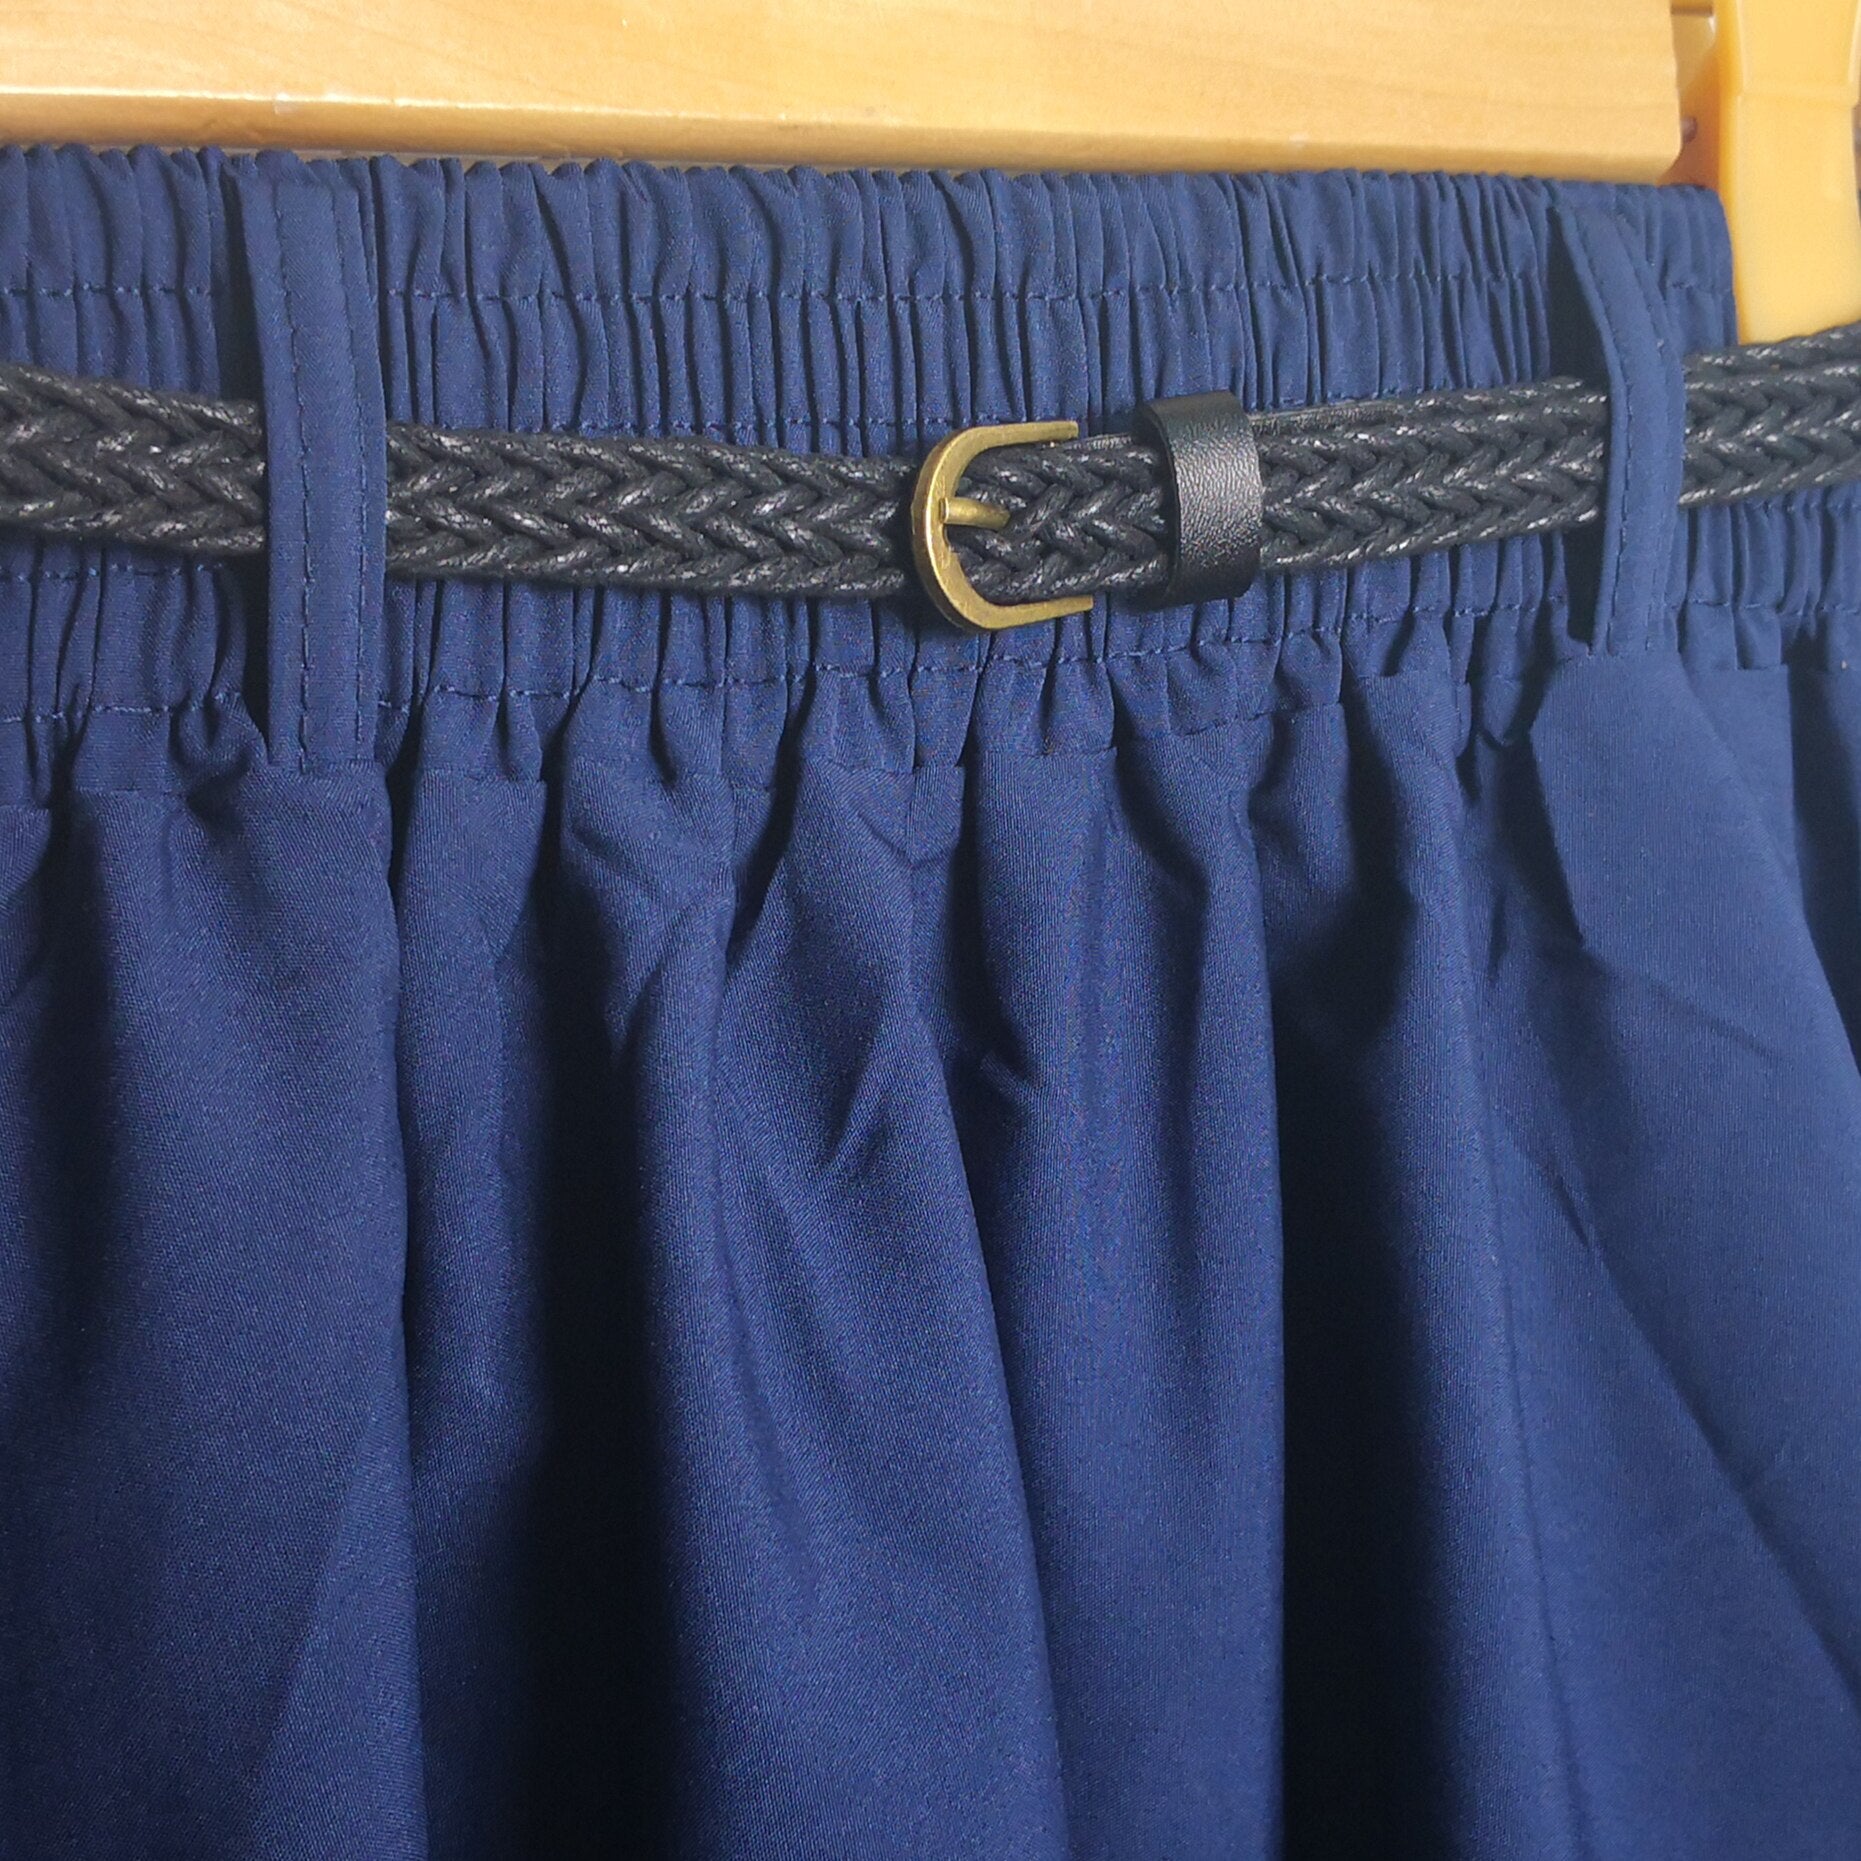 Midi Knee Length Summer With Belt Casual Elastic Korean High Waist Pleated A-line Skirt